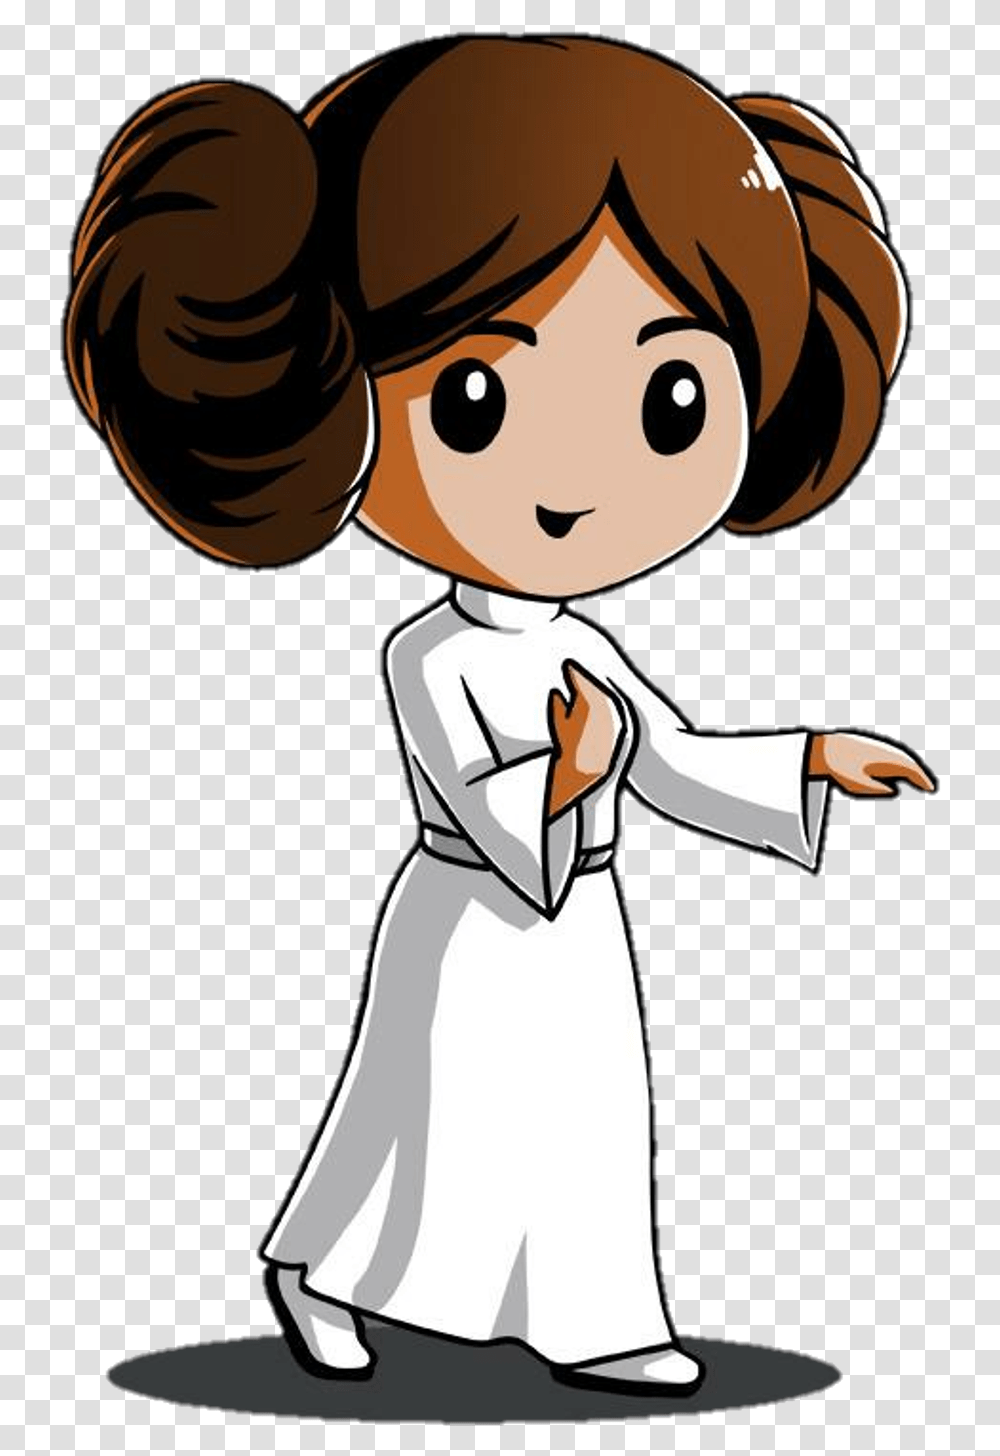 Dibujos De Star Wars Kawaii Leia Clipart Star Wars Cartoon Princess Leia, Person, Human, Chef, Performer Transparent Png